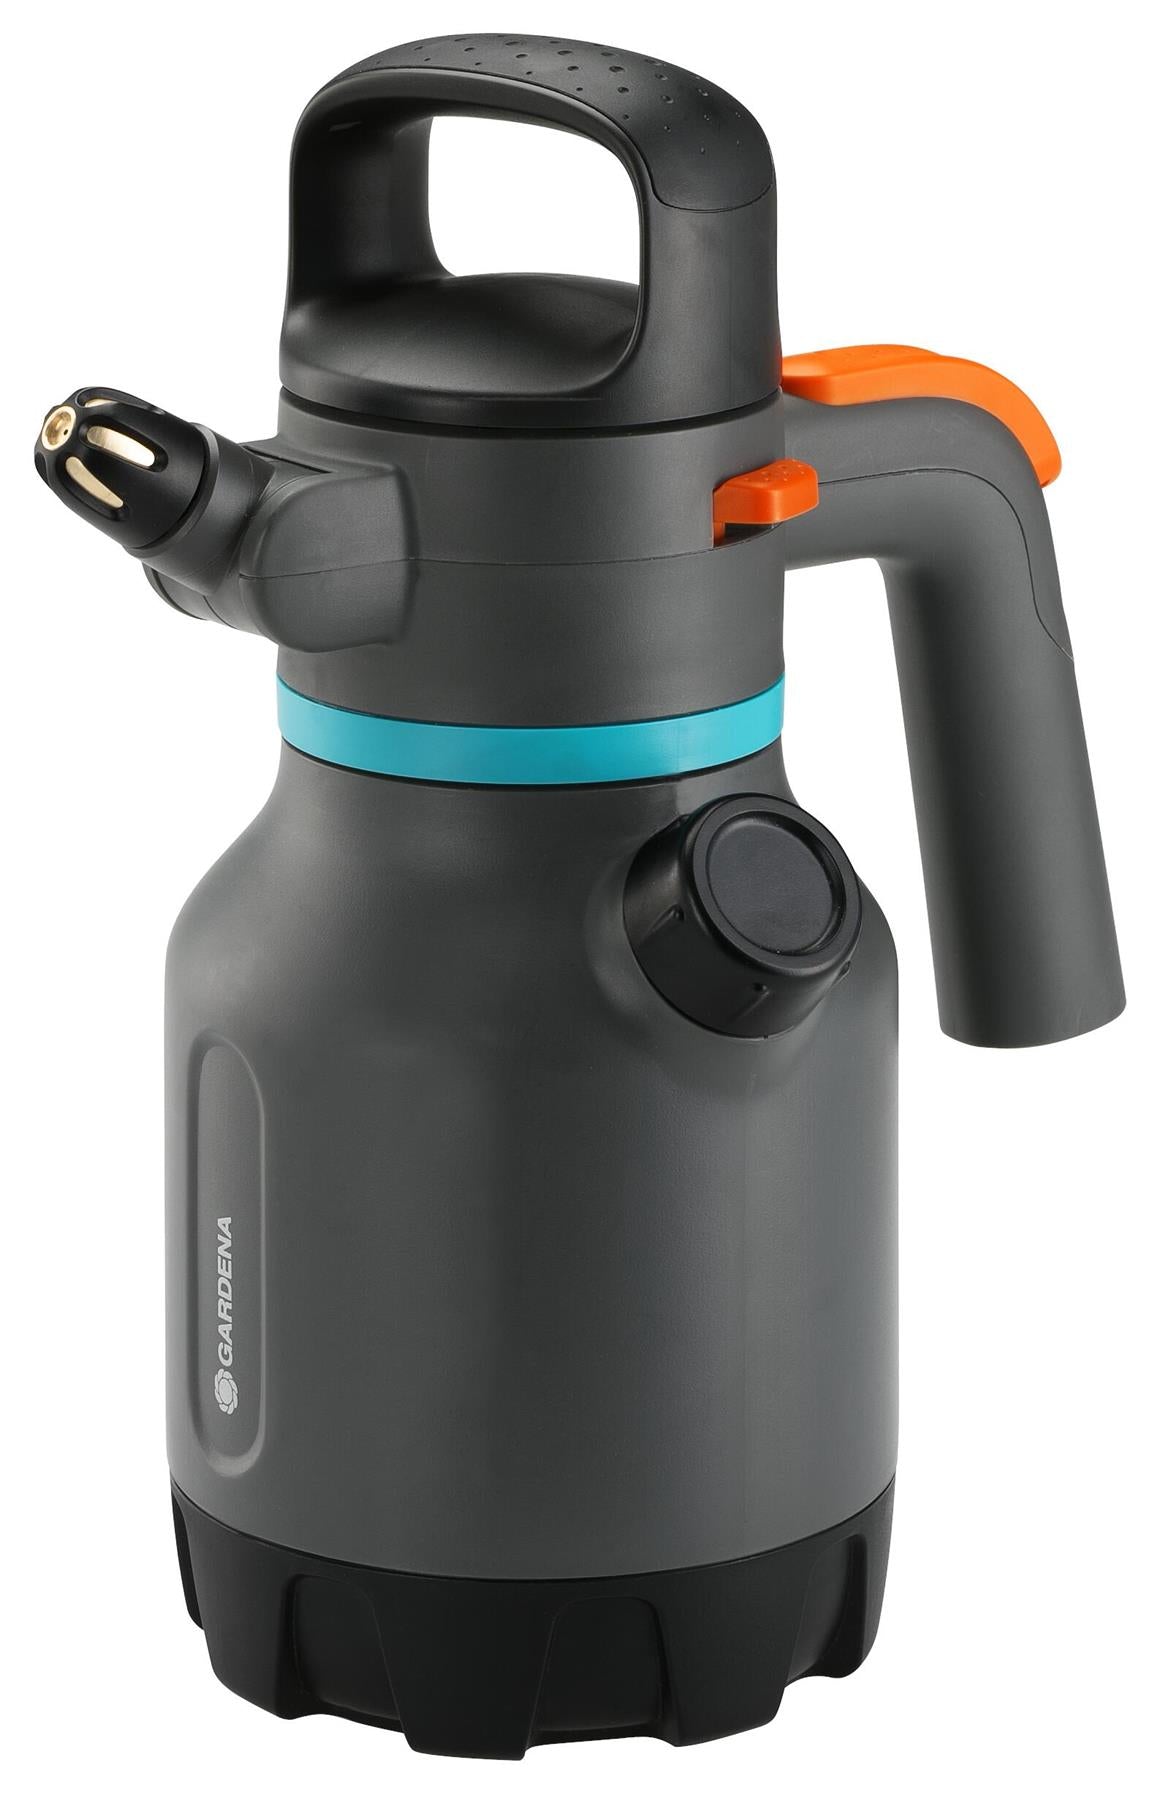 GARDENA Pressure Sprayer 1.25L